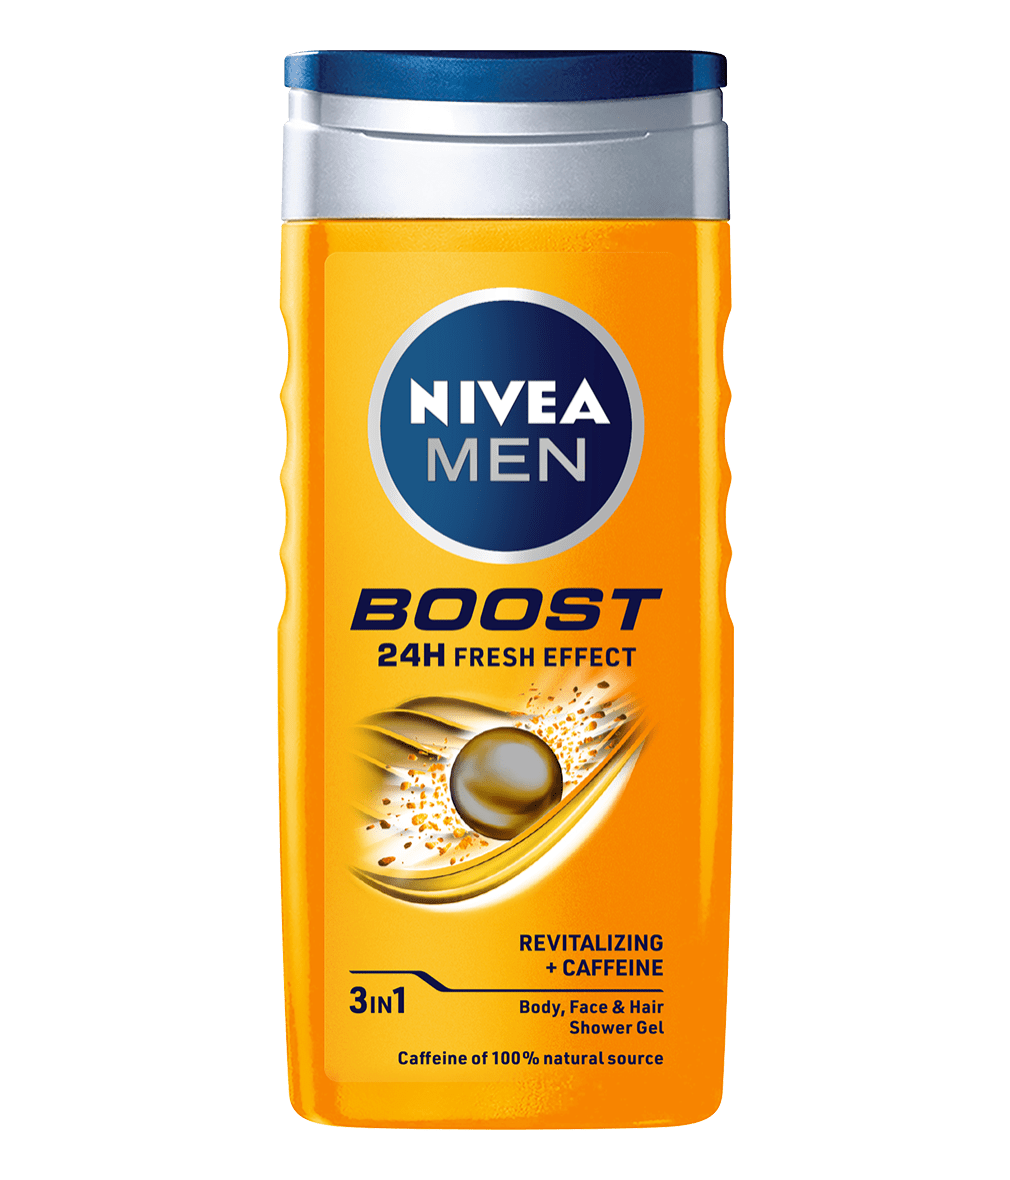 92839 Nivea Men Boost shower gel 250ml clean packshot